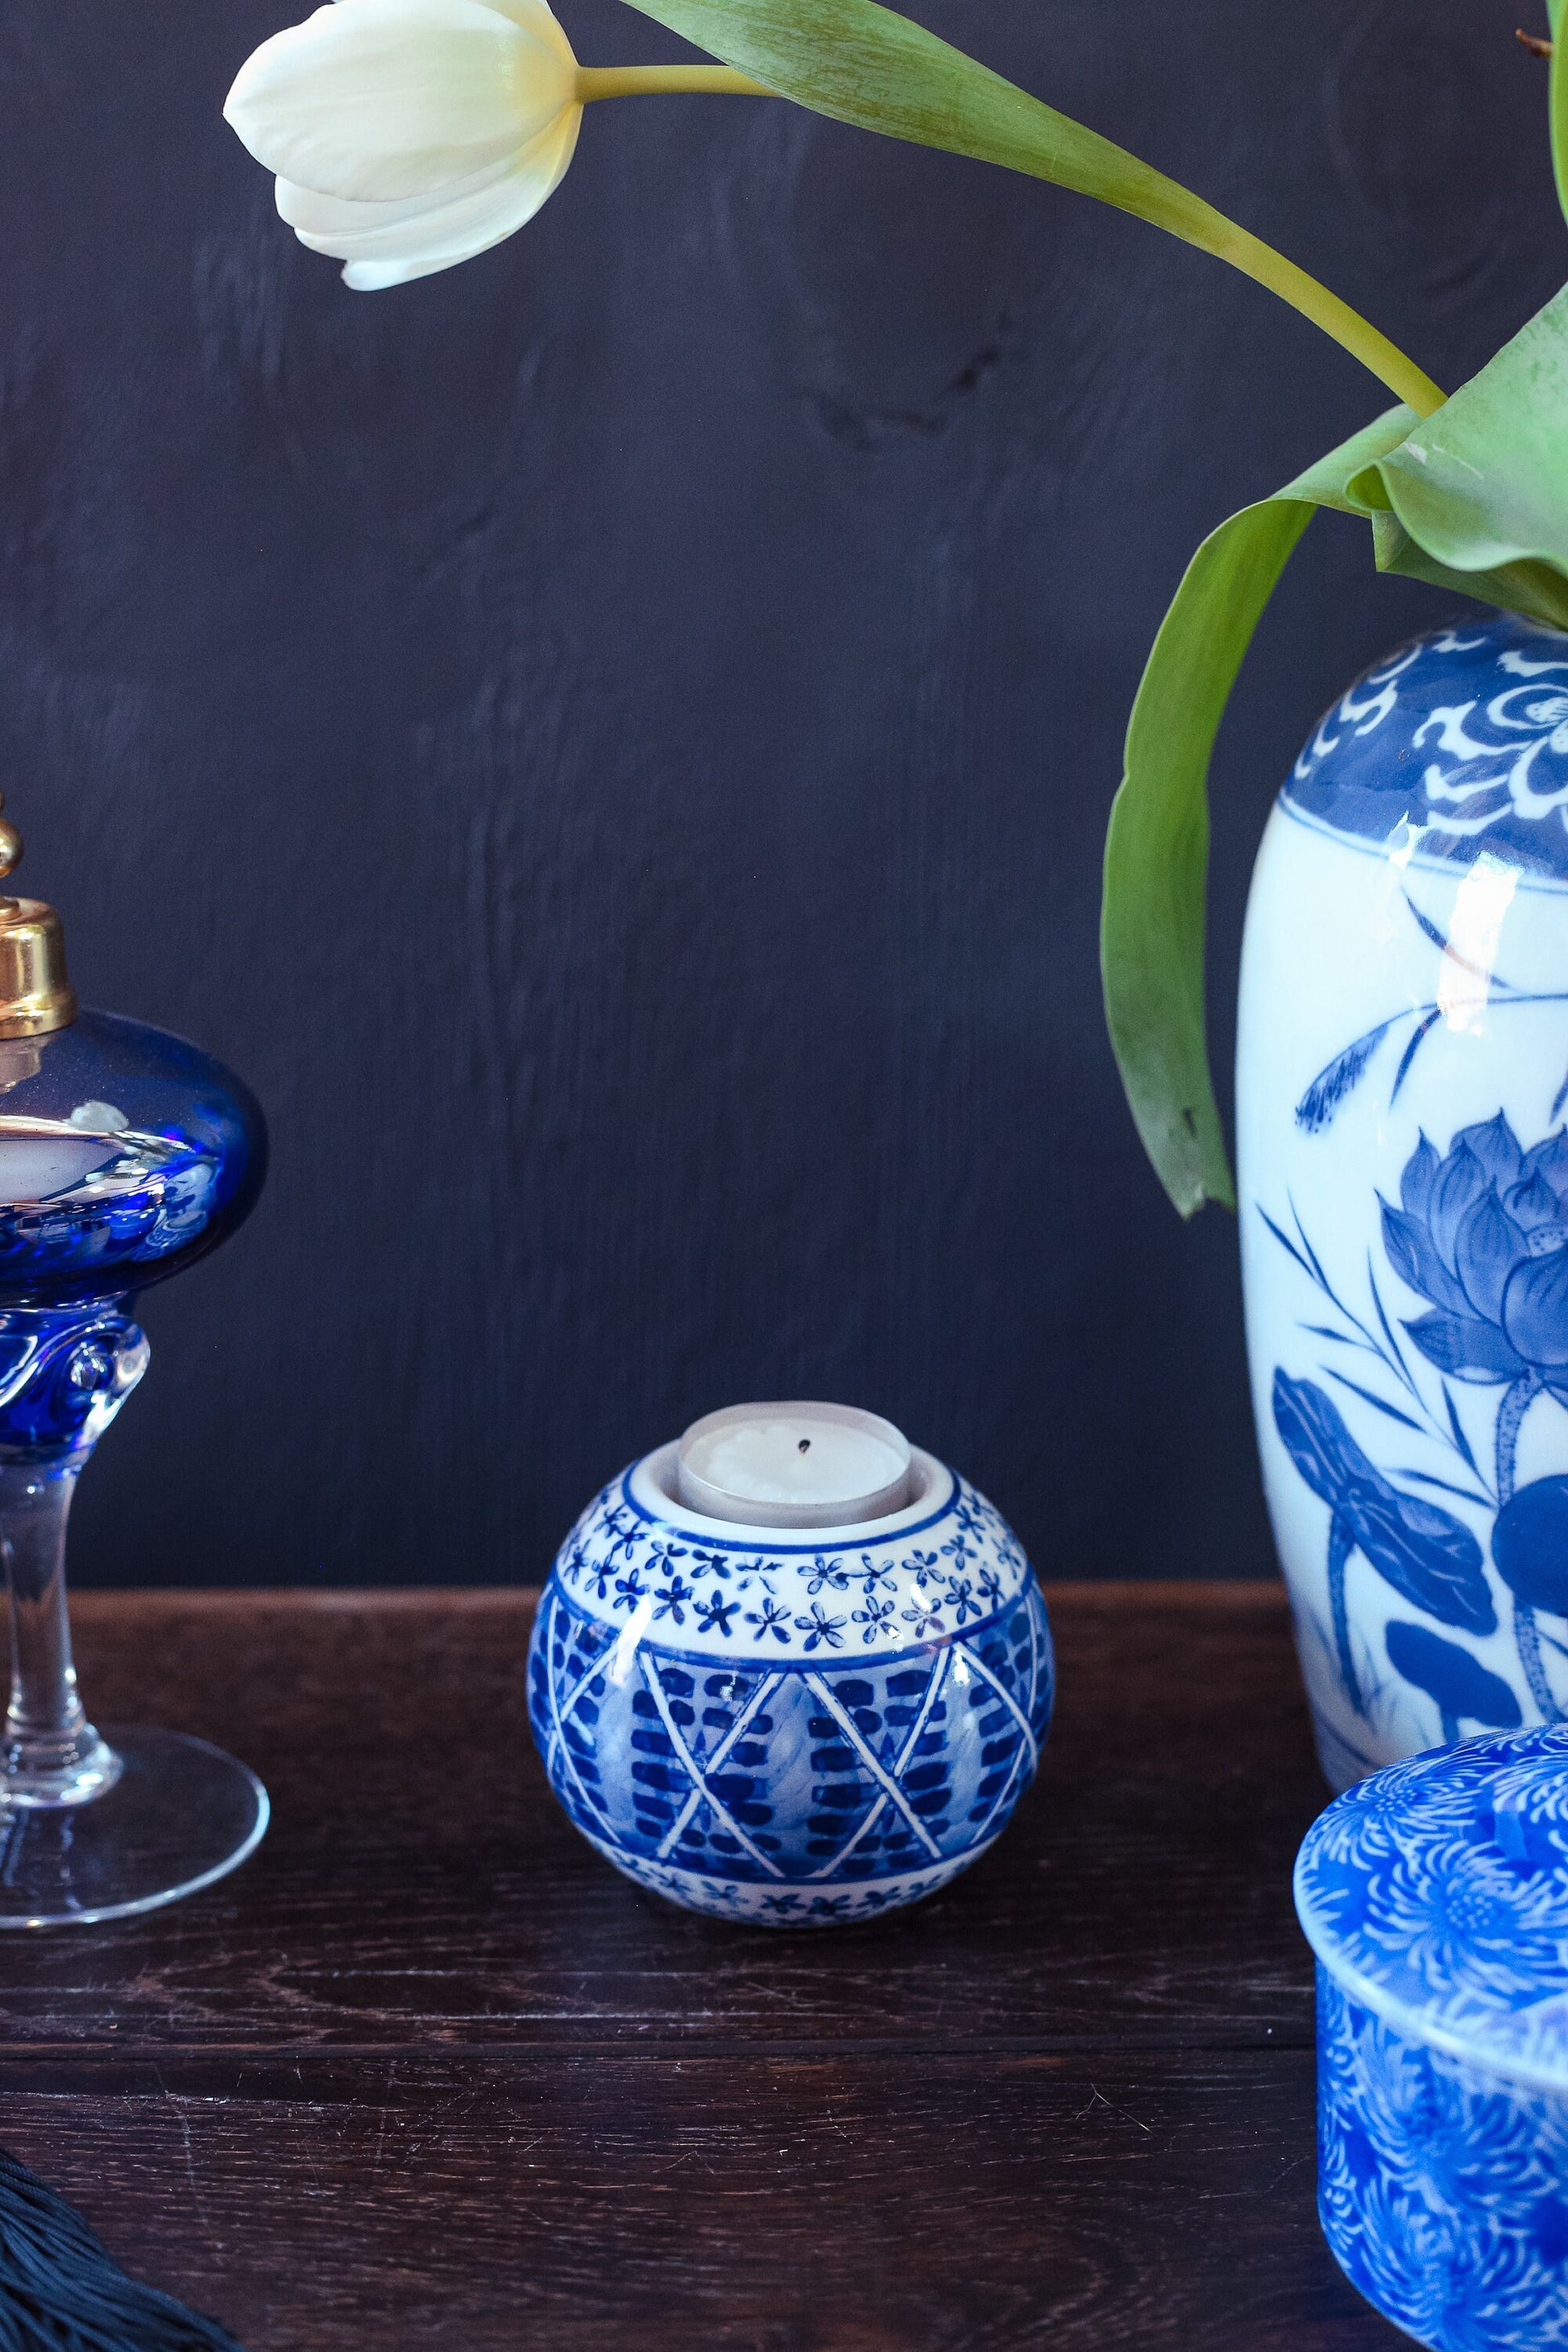 Hand Painted Blue & White Ceramic Globe Votive Candle Holder - Vintage Porcelain Candle Holder